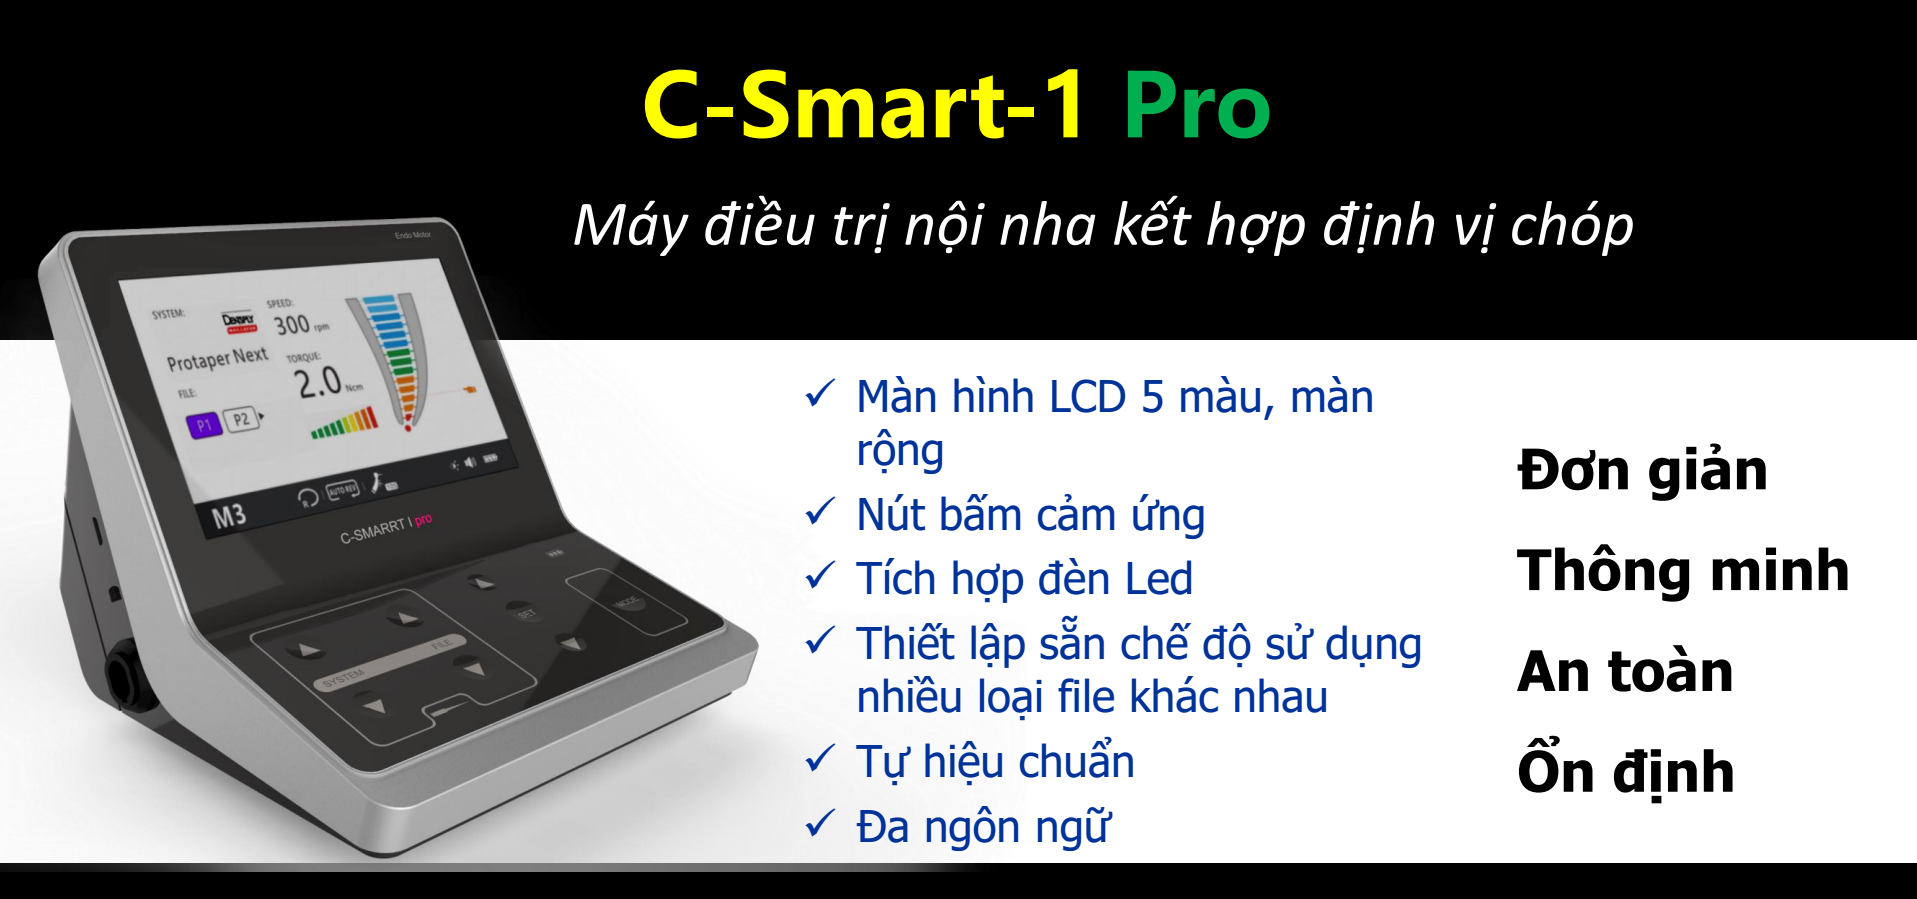 may-noi-nha-ket-hop-dinh-vi-chop-C Smart-1-pro